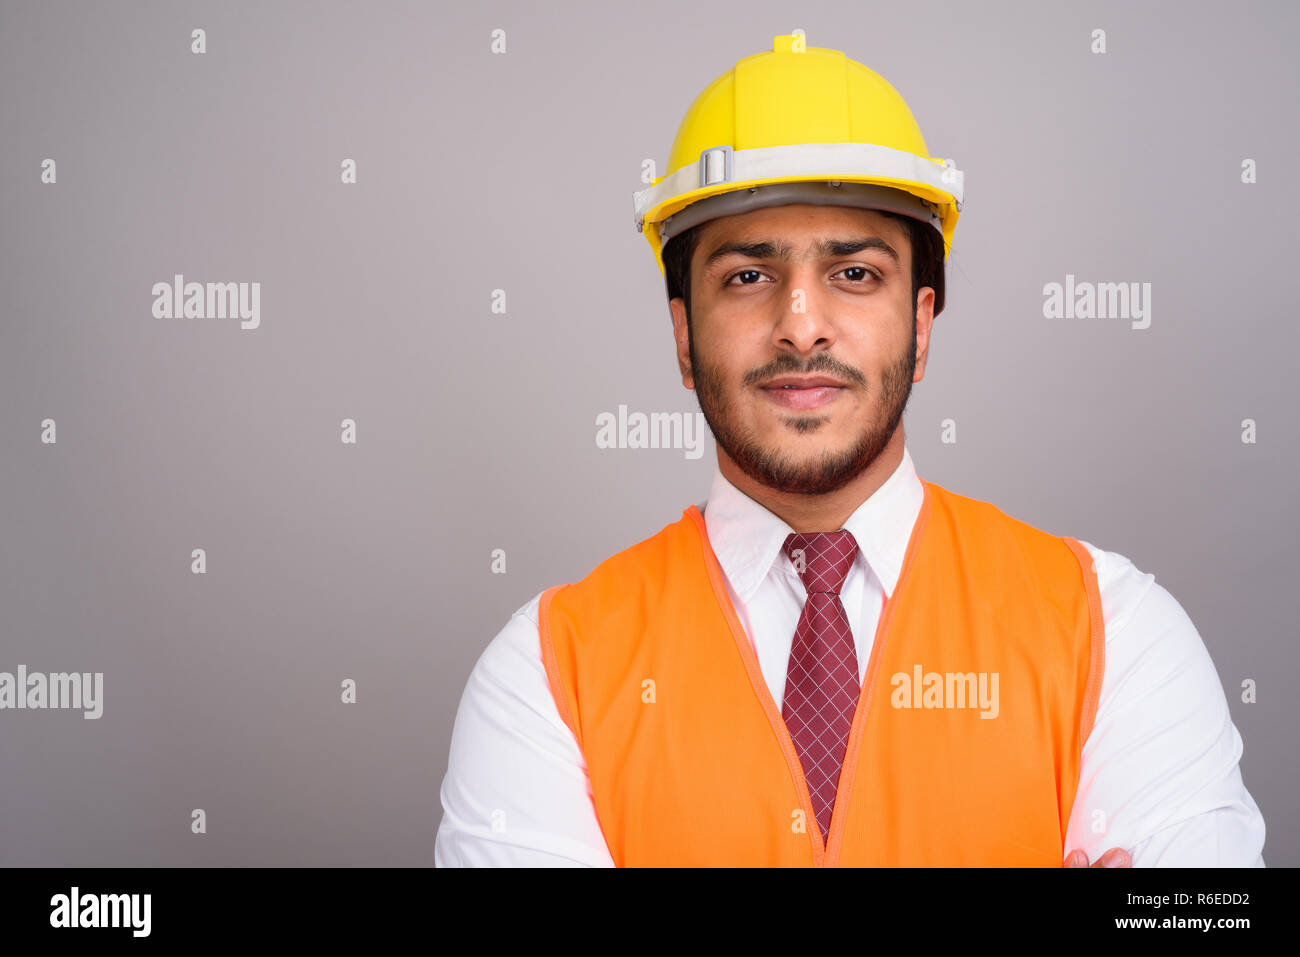 Portrait of Indian man construction worker businessman Stock Photo